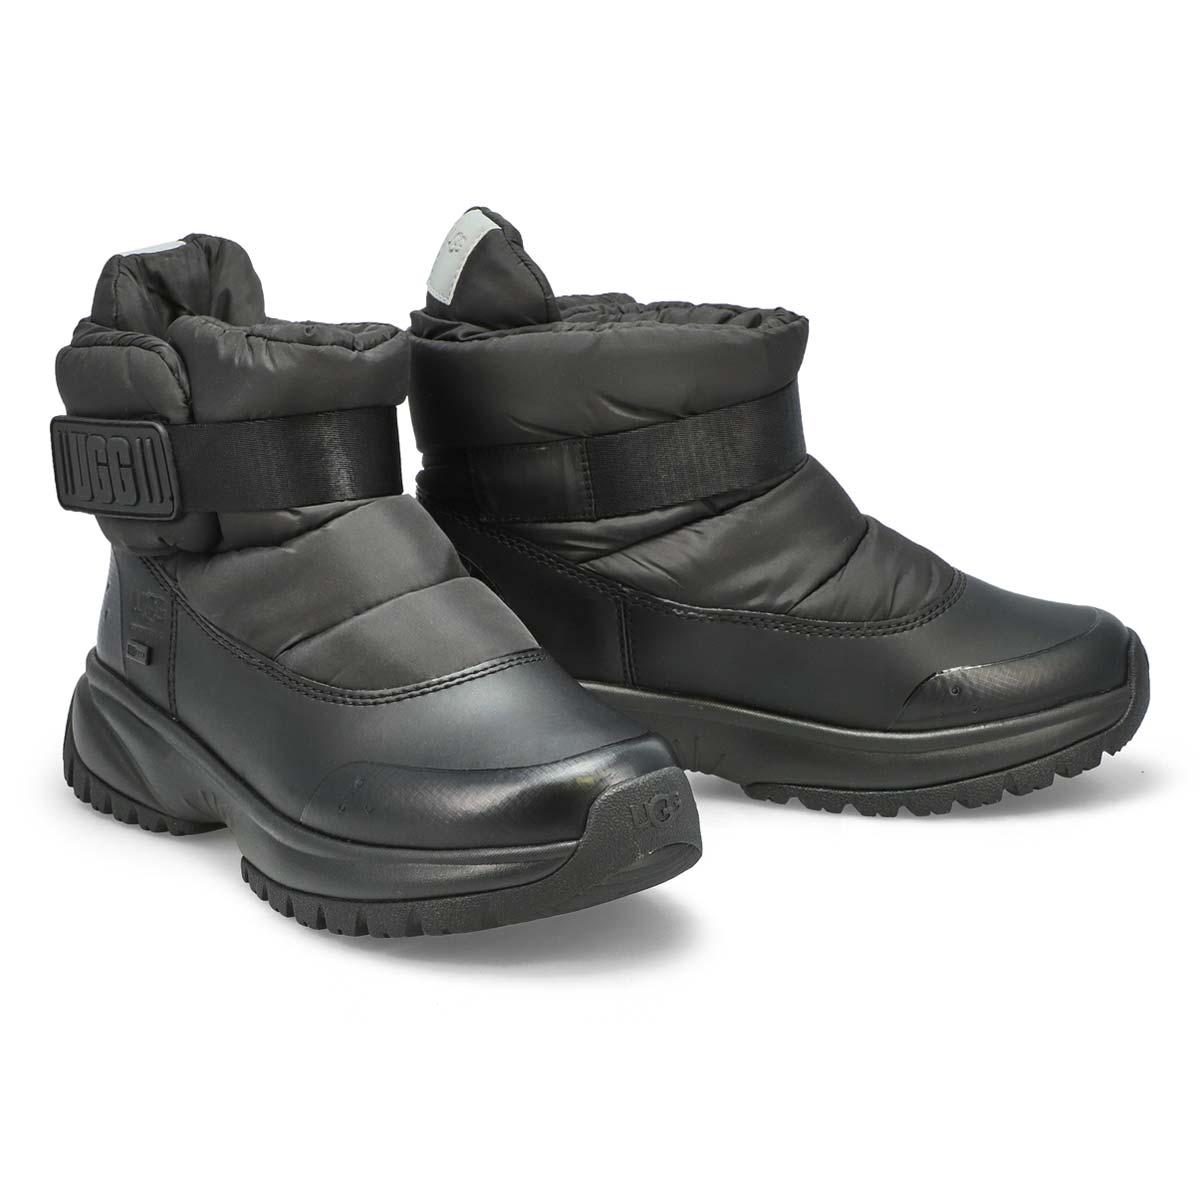 Women's Yose Puff Winter Boot - Black